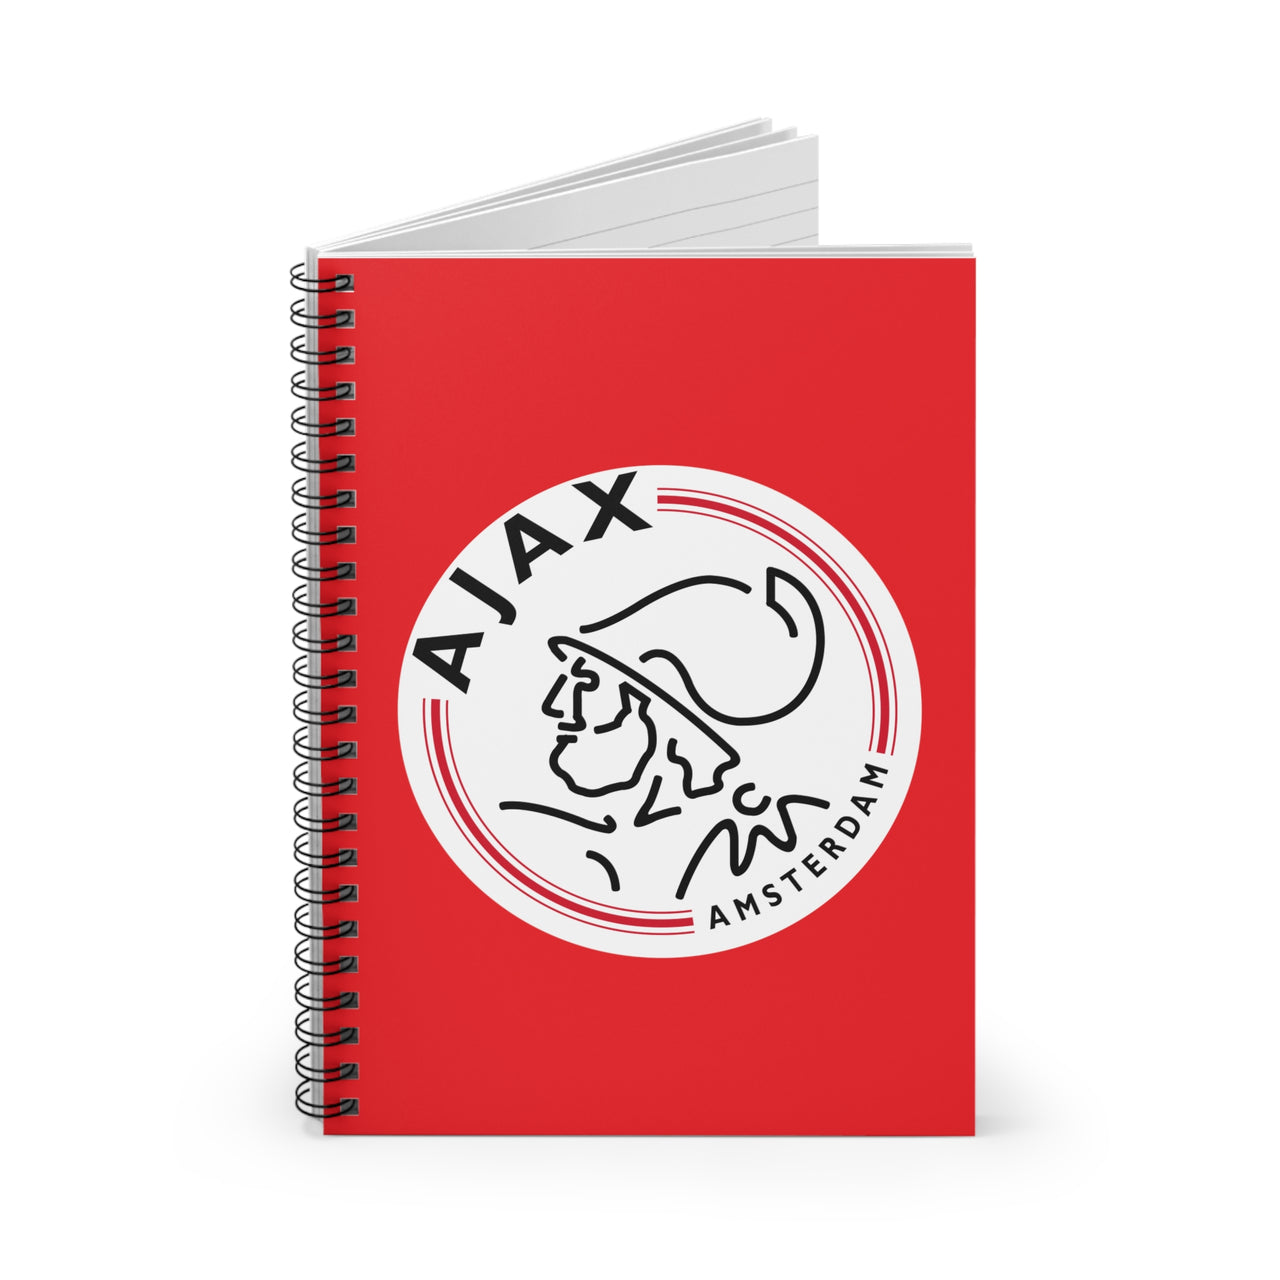 Ajax Spiral Notebook - Ruled Line